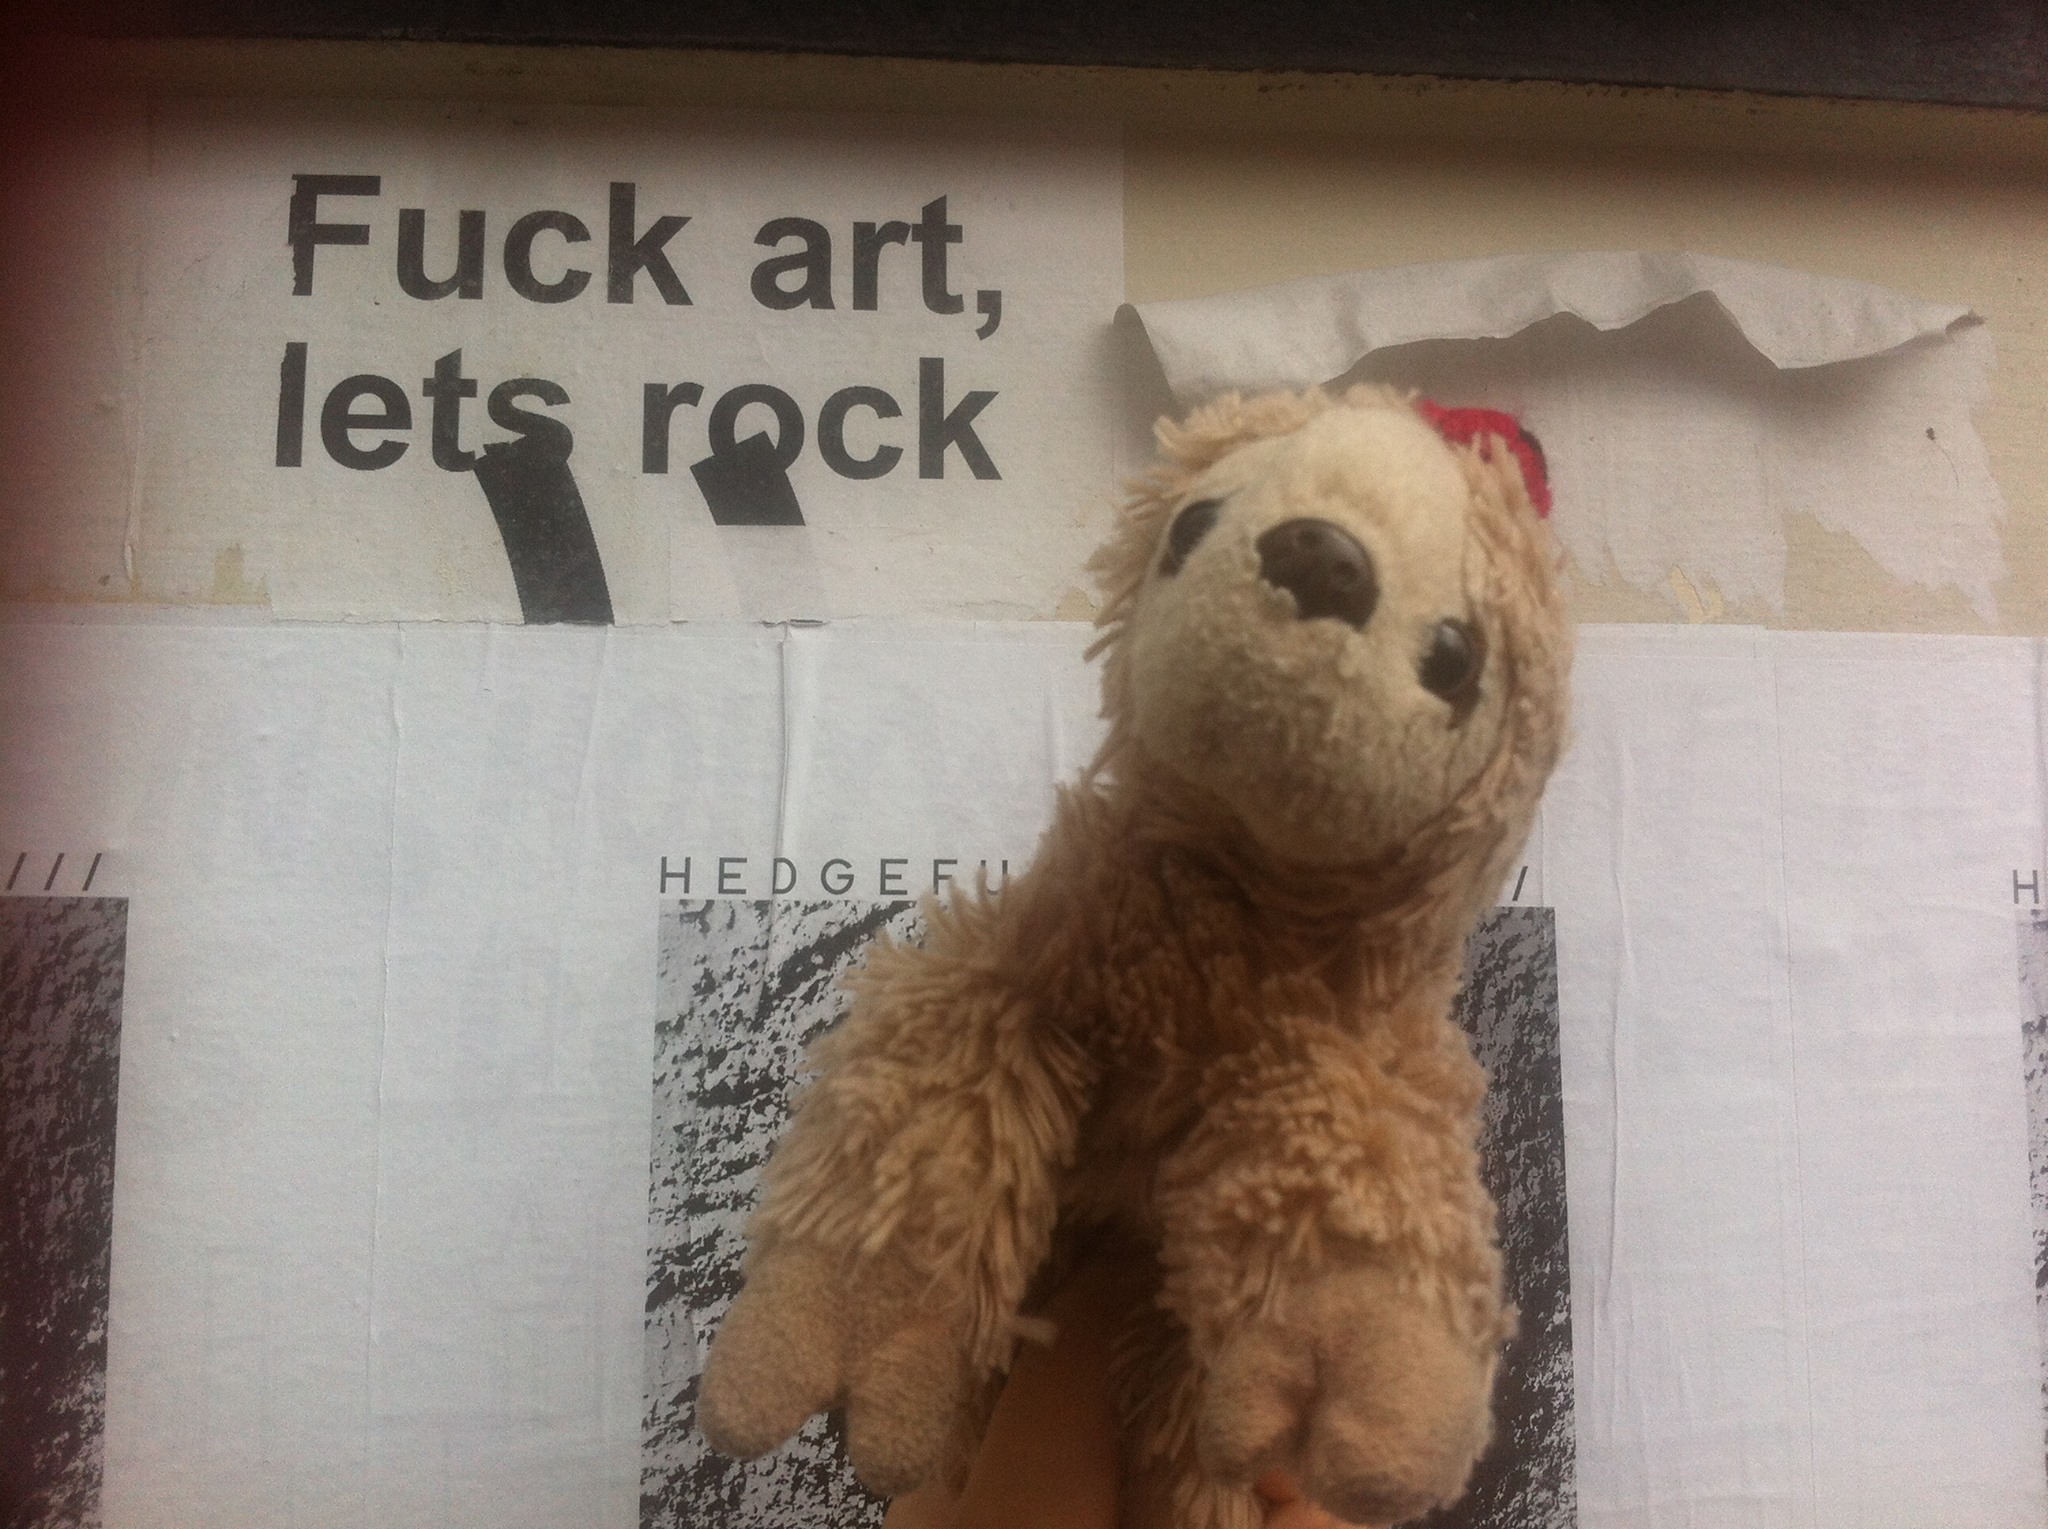 comrade snuggleton beside some graffiti that reads "fuck art, lets rock"